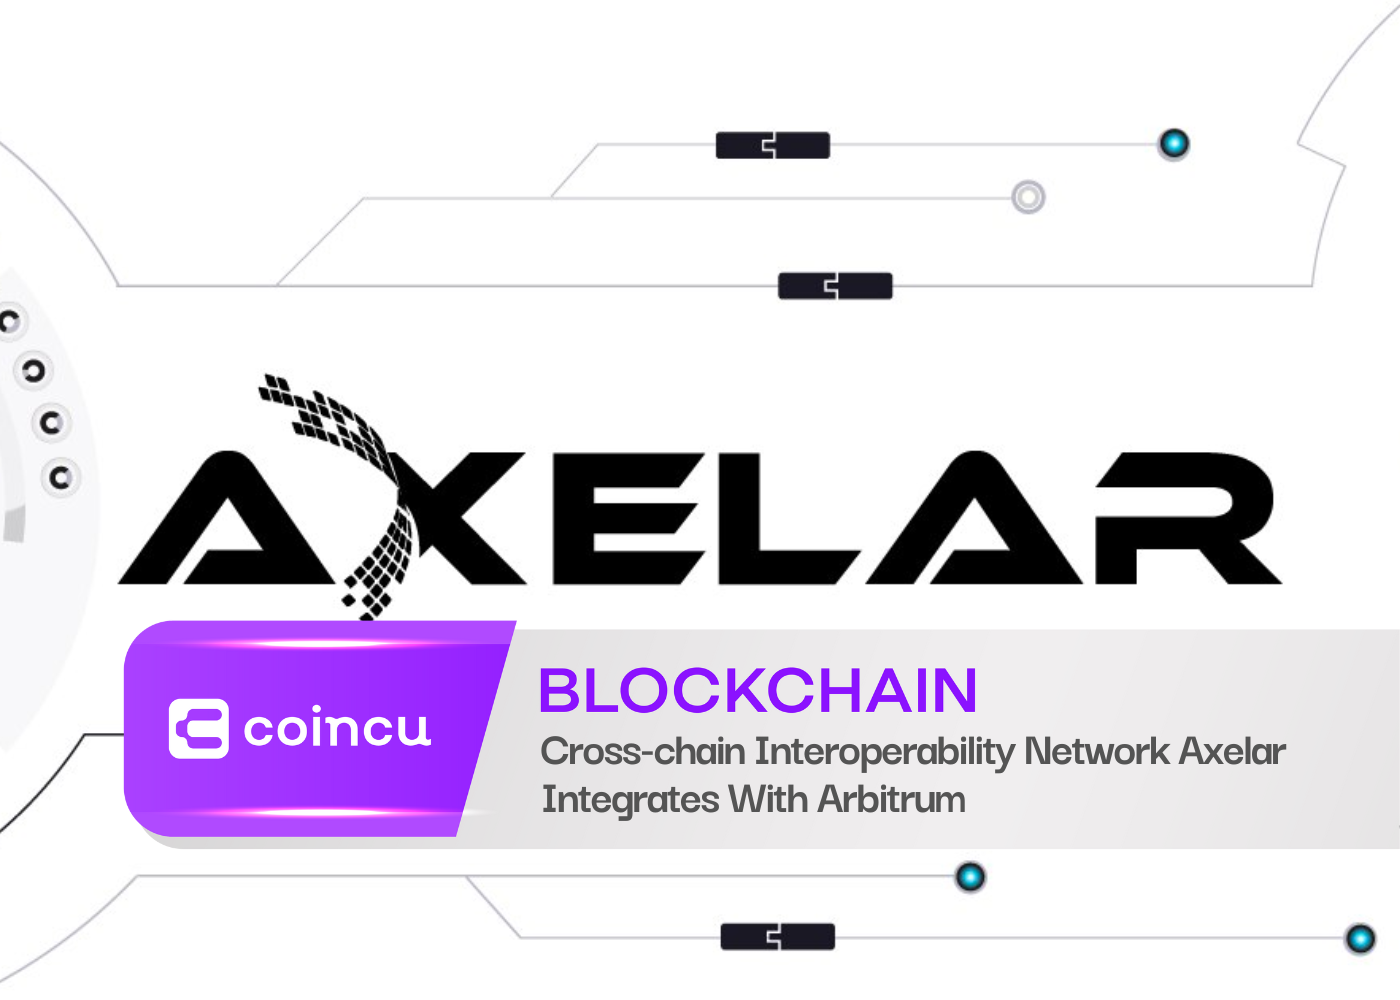 Cross-chain Interoperability Network Axelar Integrates With Arbitrum